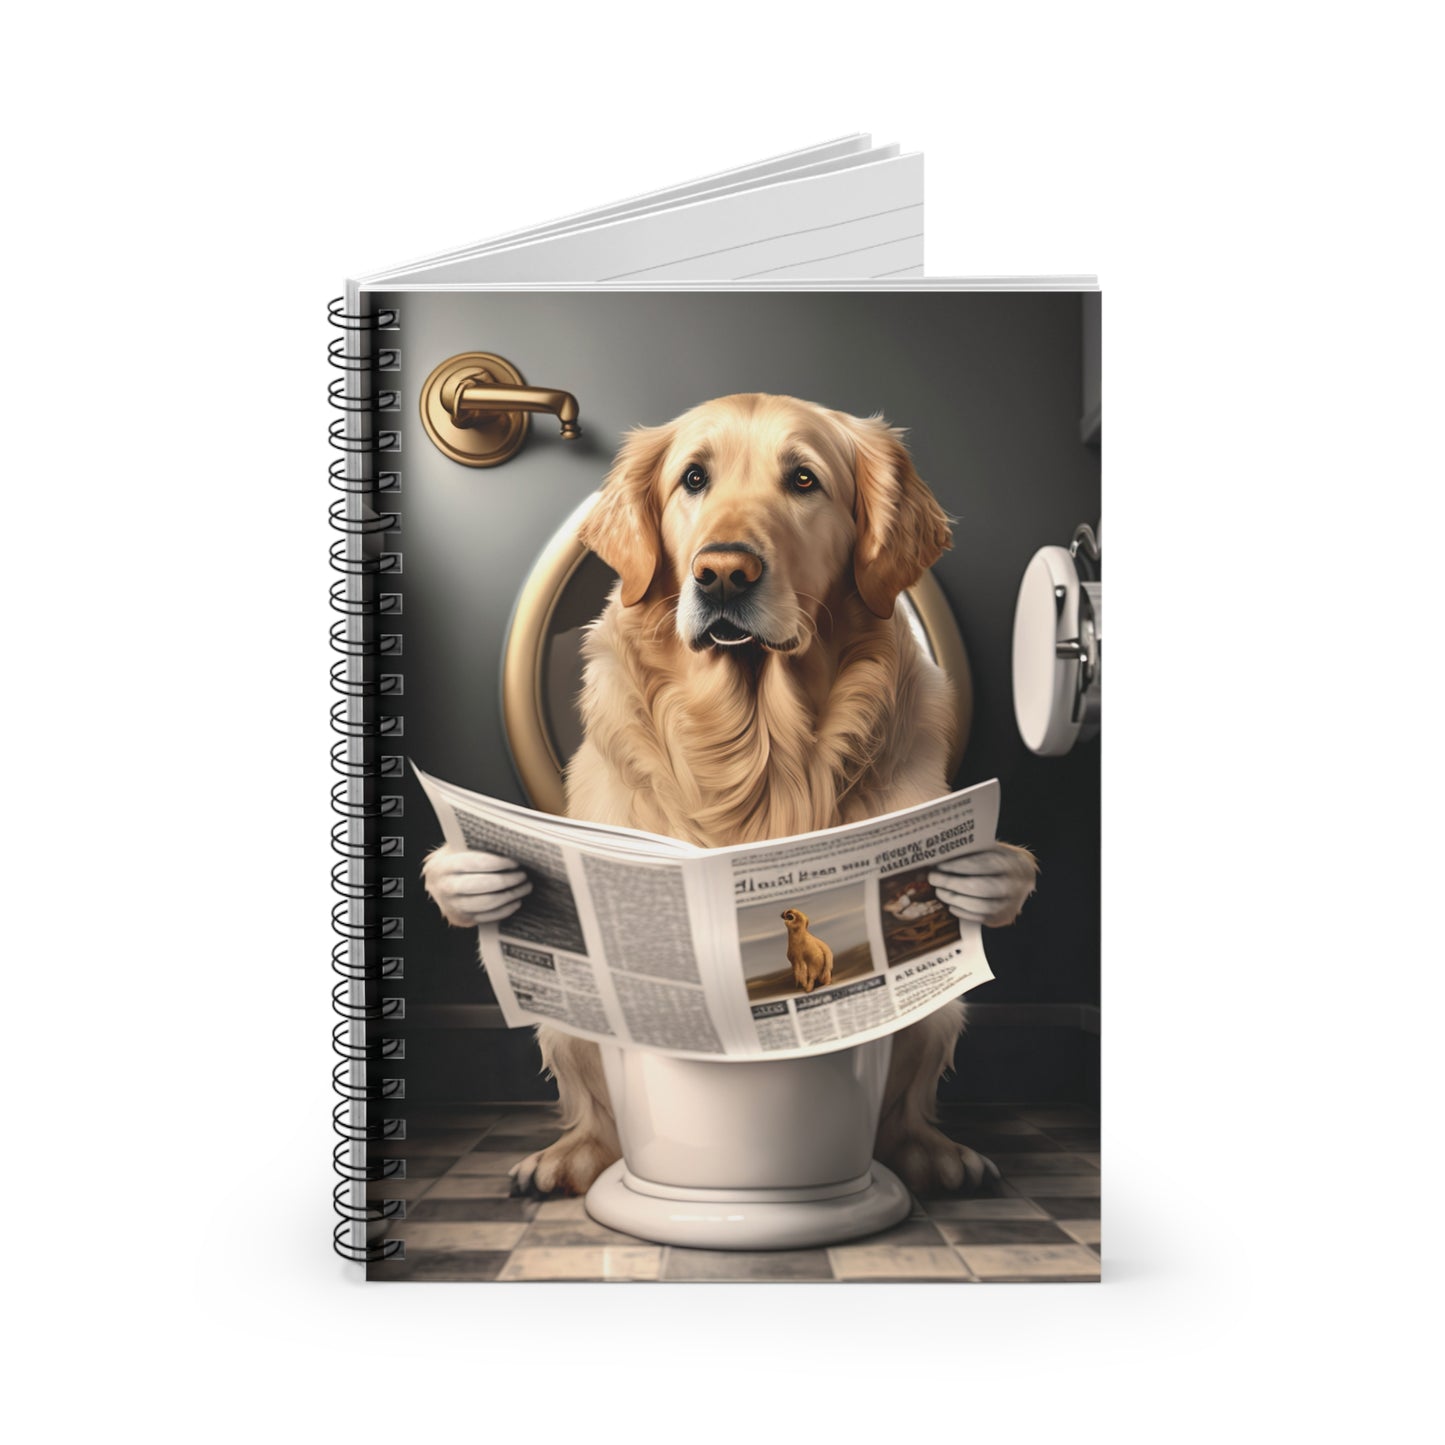 Golden Retriever on Toilet | Spiral Notebook - Ruled Line